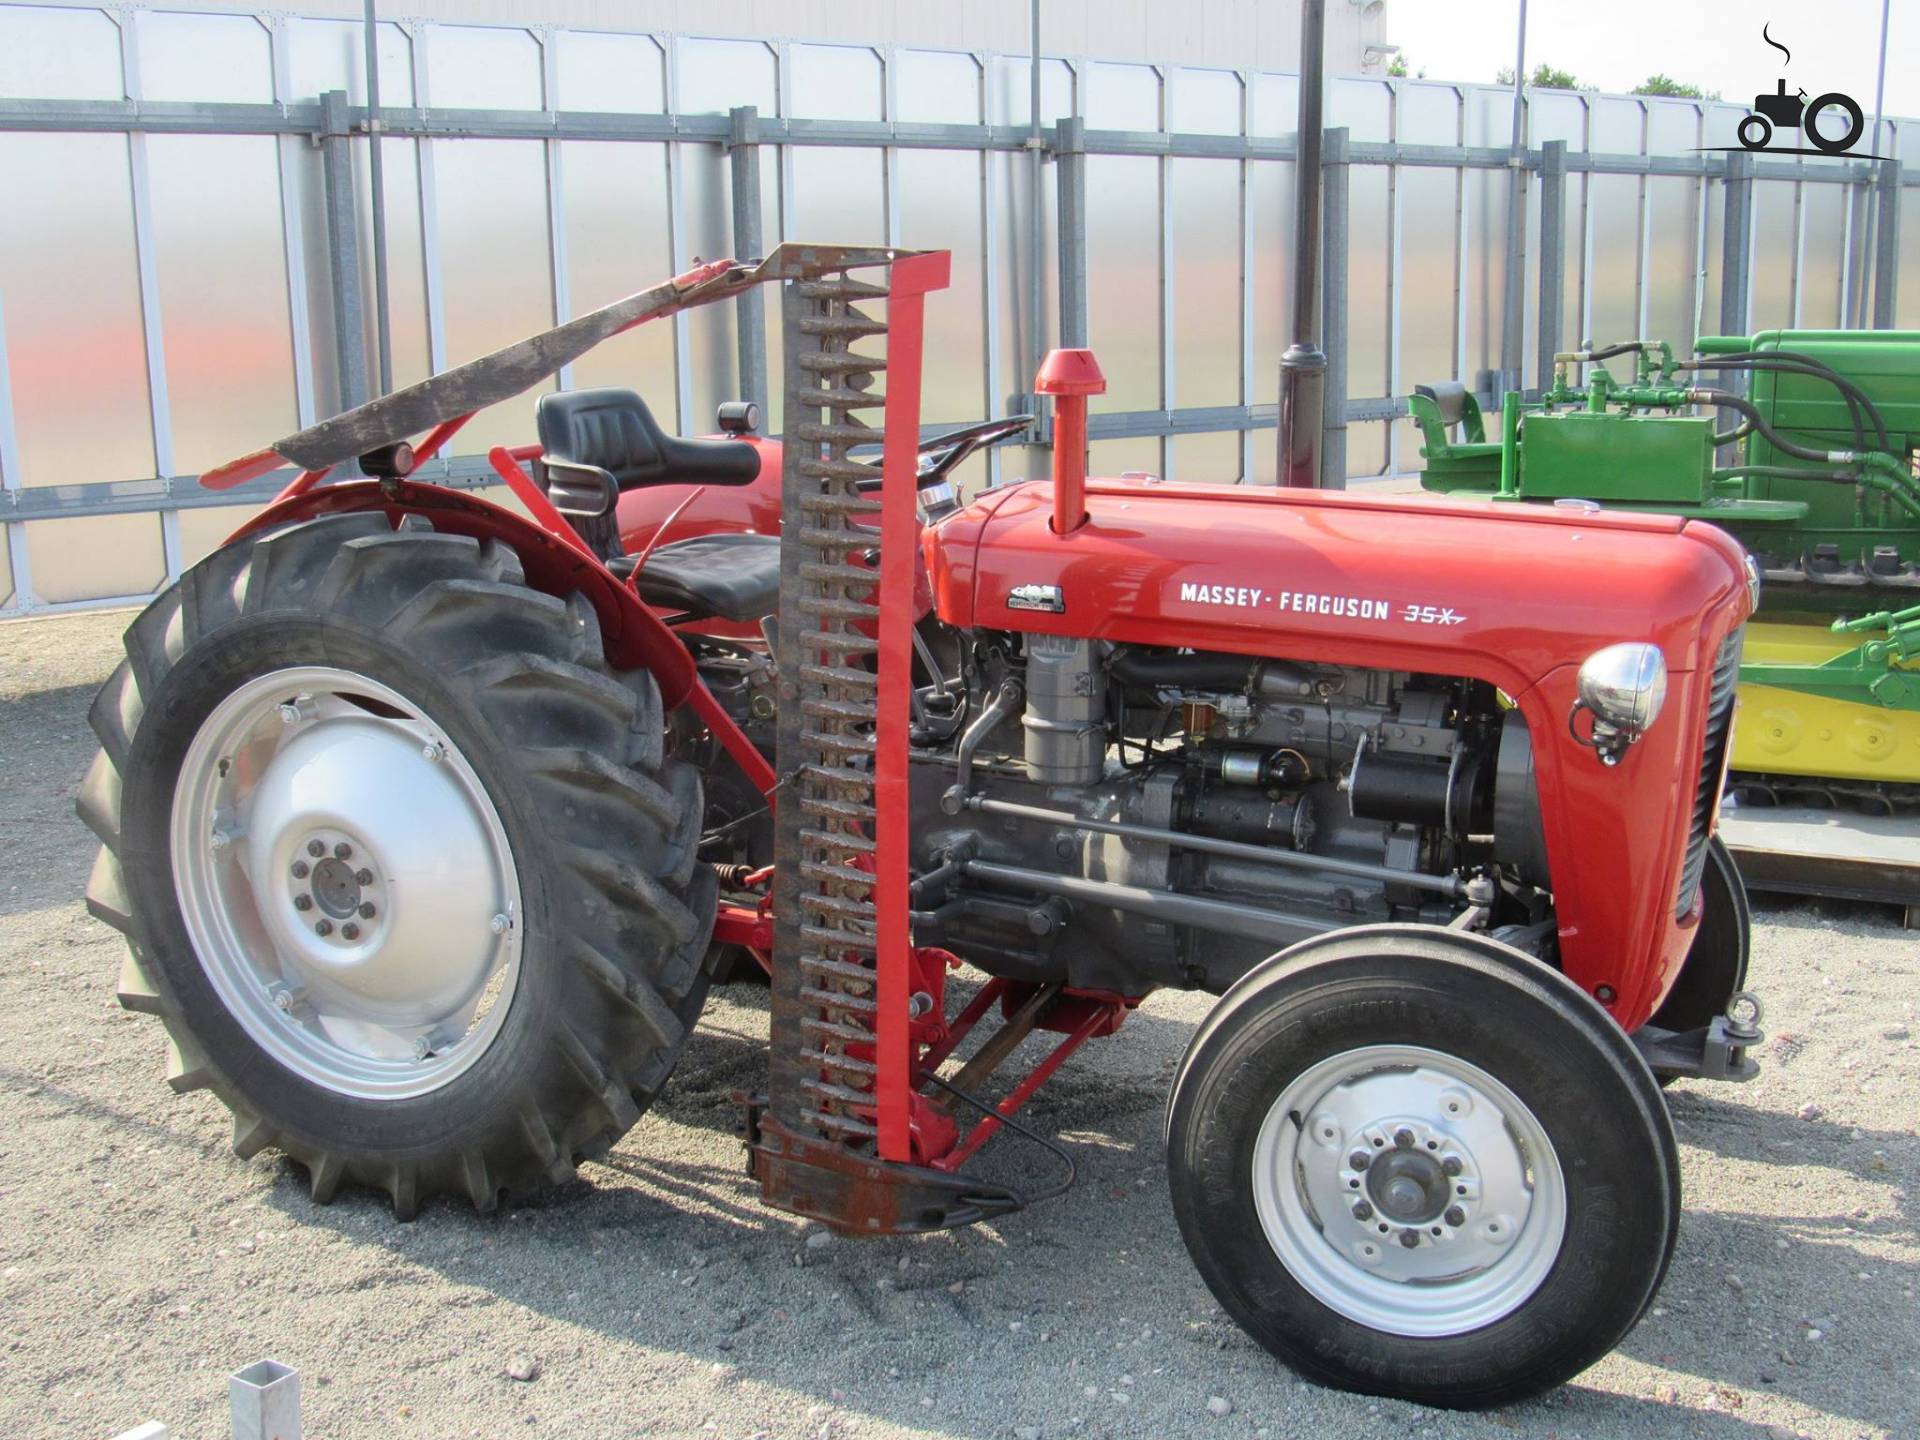 Massey Ferguson 35 X France Tracteur Image 1171463